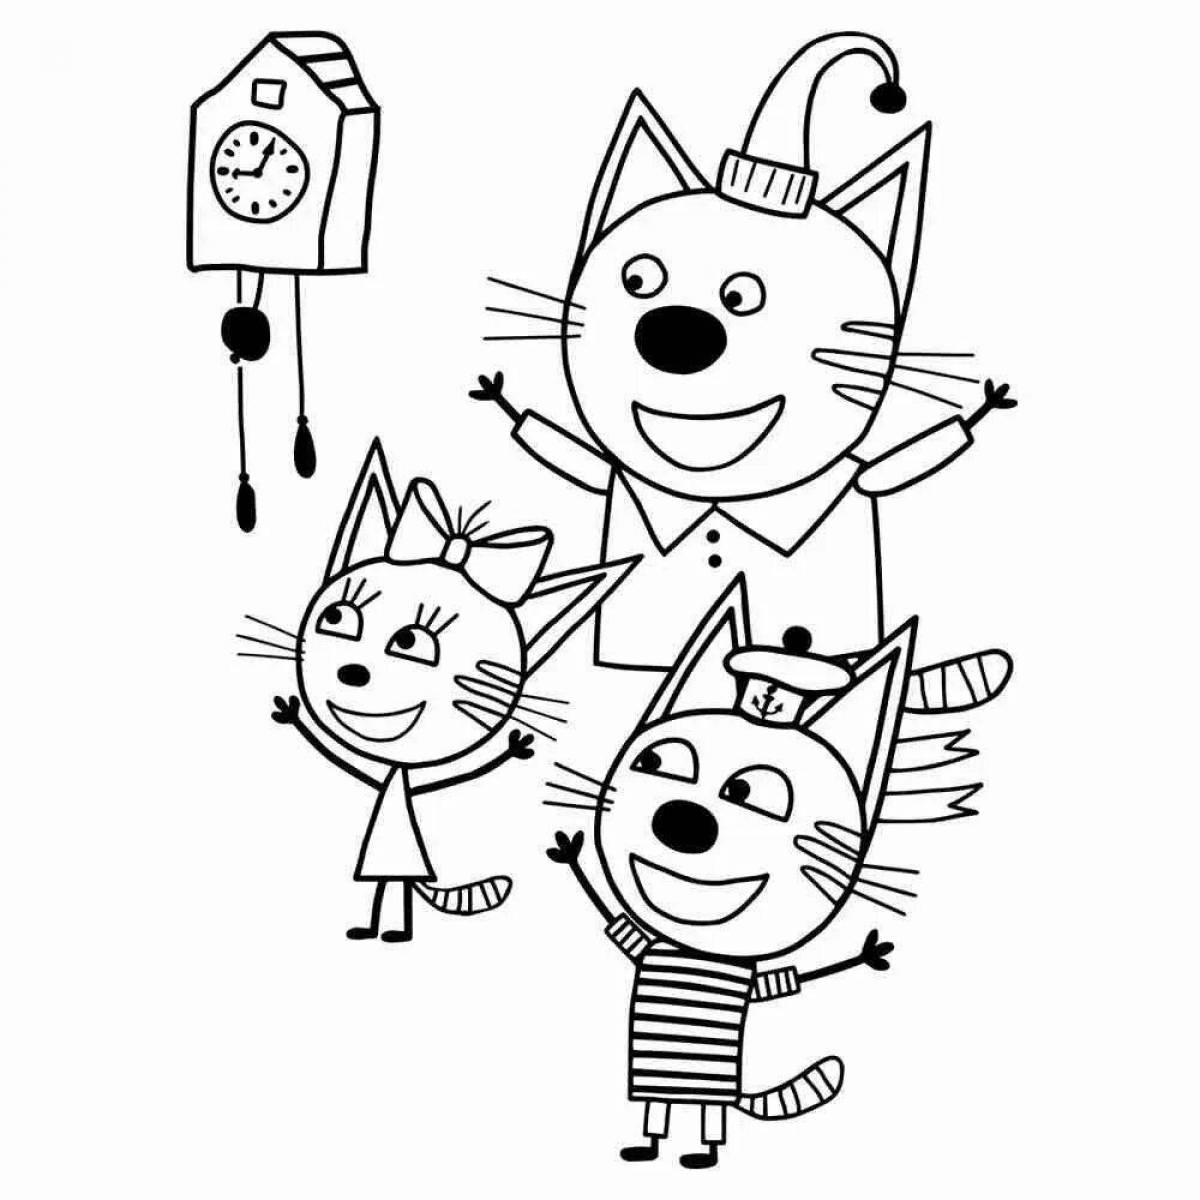 Three cats magic family coloring book